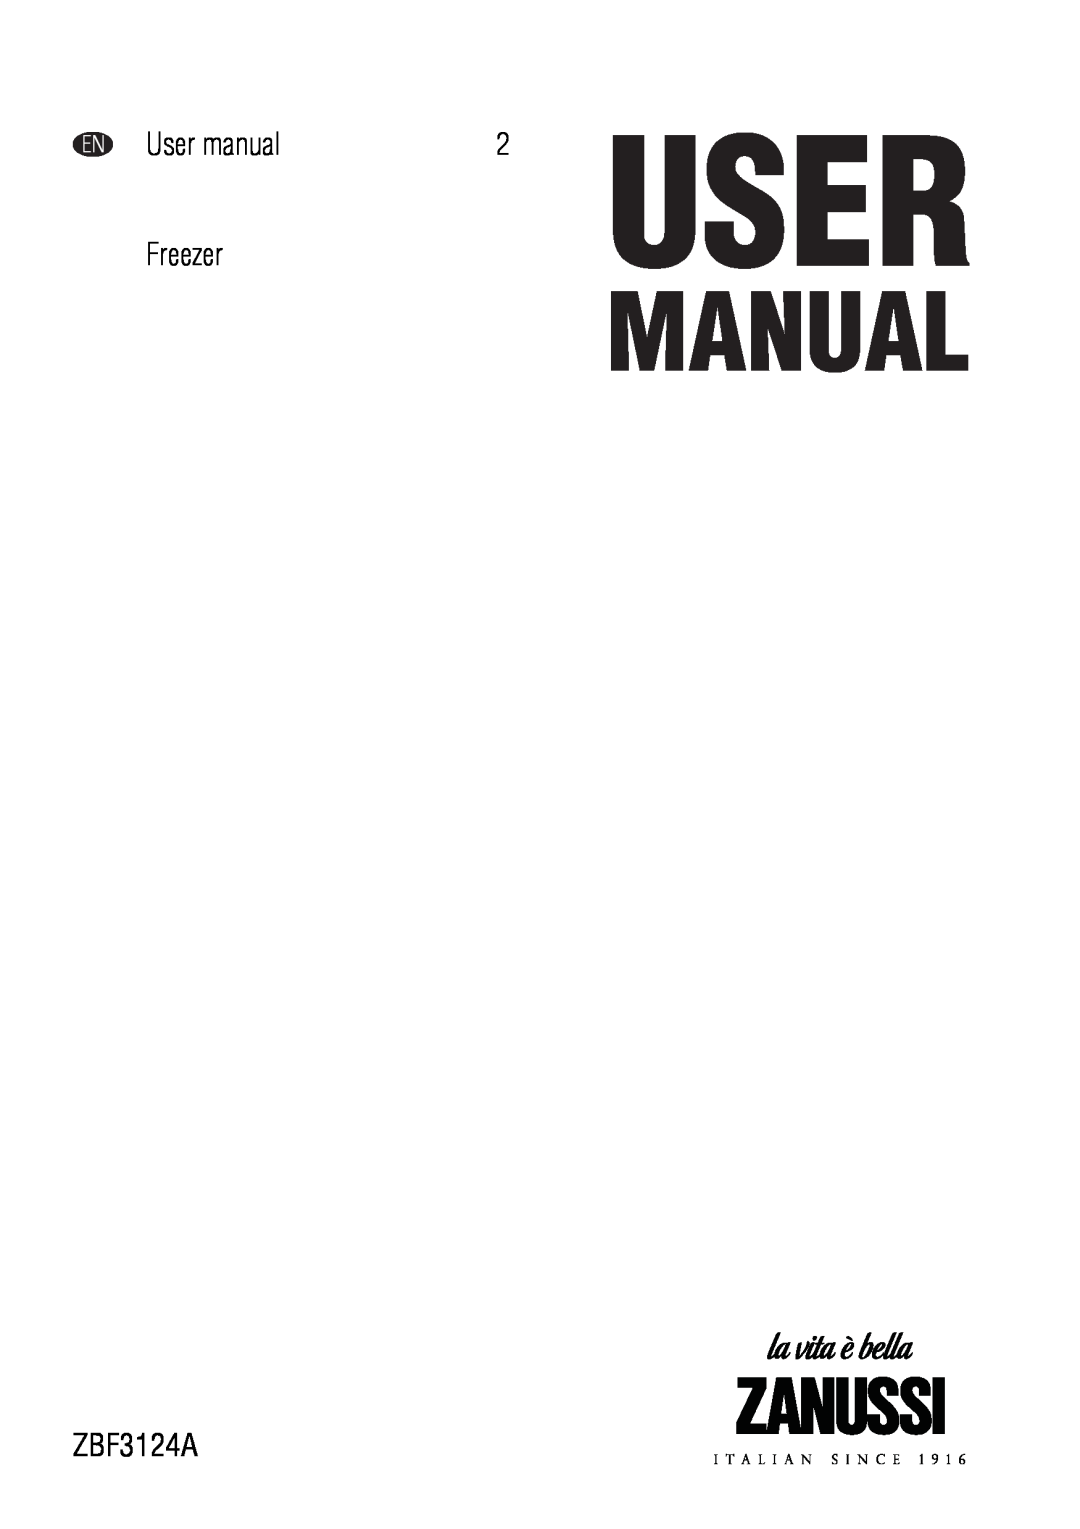 Zanussi ZBF3124A user manual User manual, Freezer 